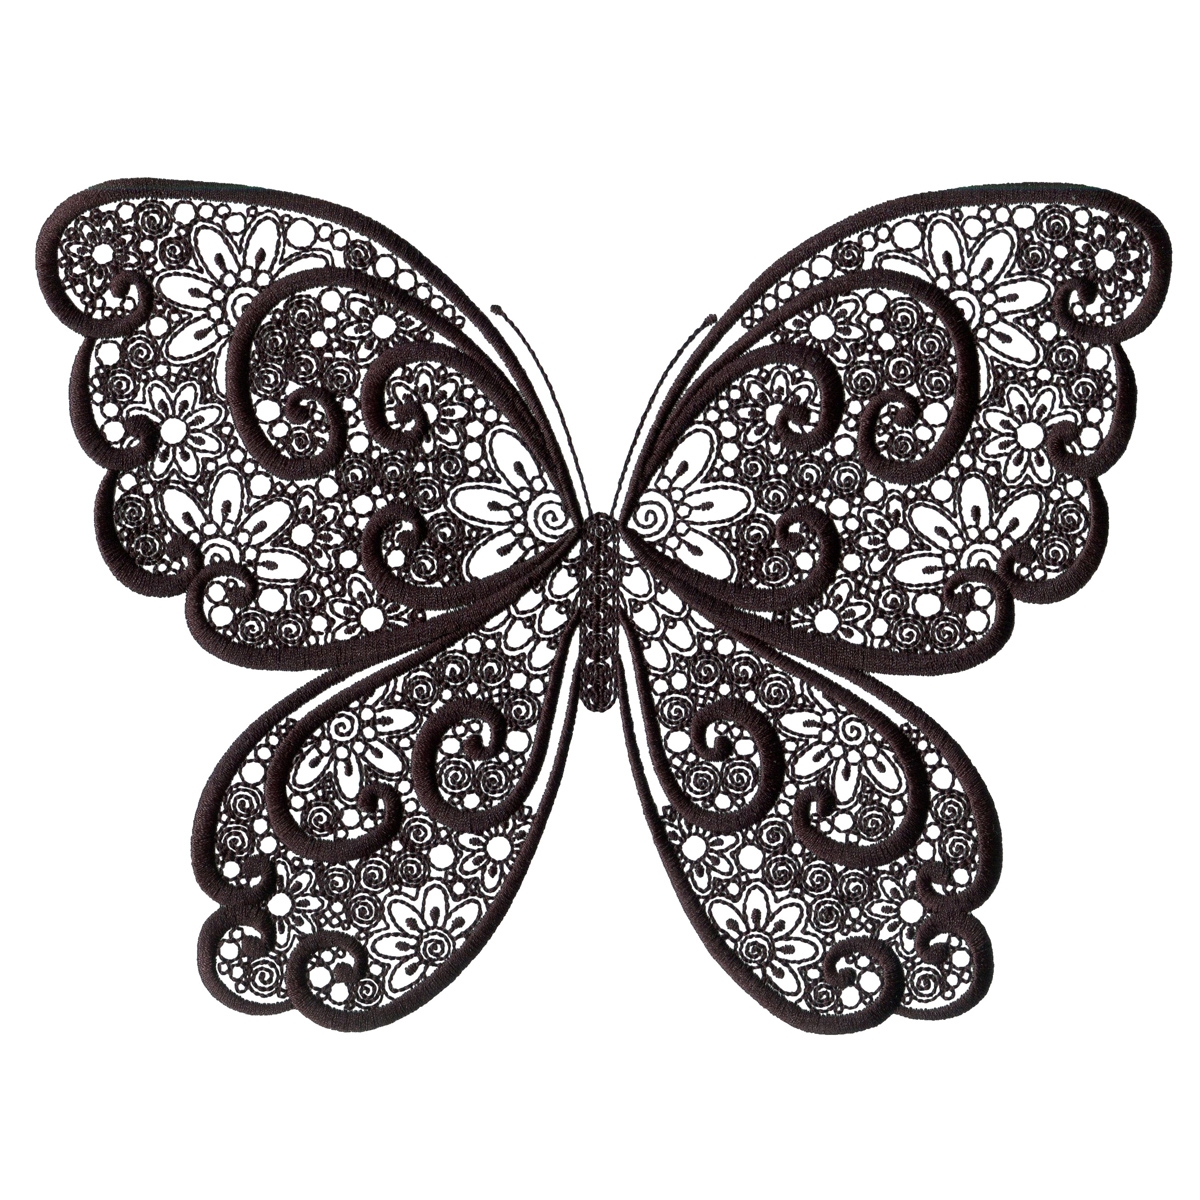 Butterfly Embroidery Pattern Butterfly 2 Zen Garden Sketch Embroidery Design